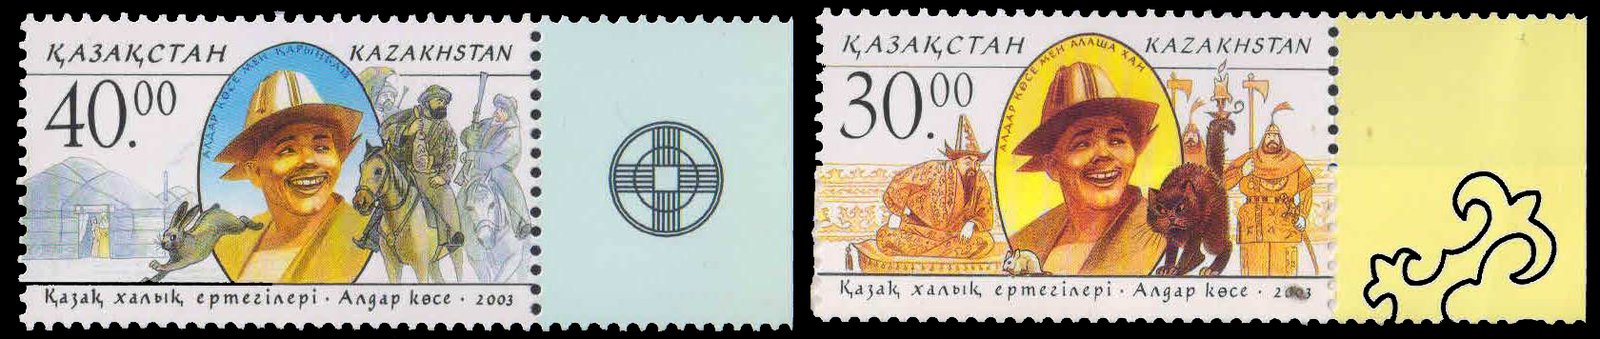 KAZAKHSTAN 2003-Aldar Kose, Fairy Tale Character, Set of 2, MNH, s.G. 410-411